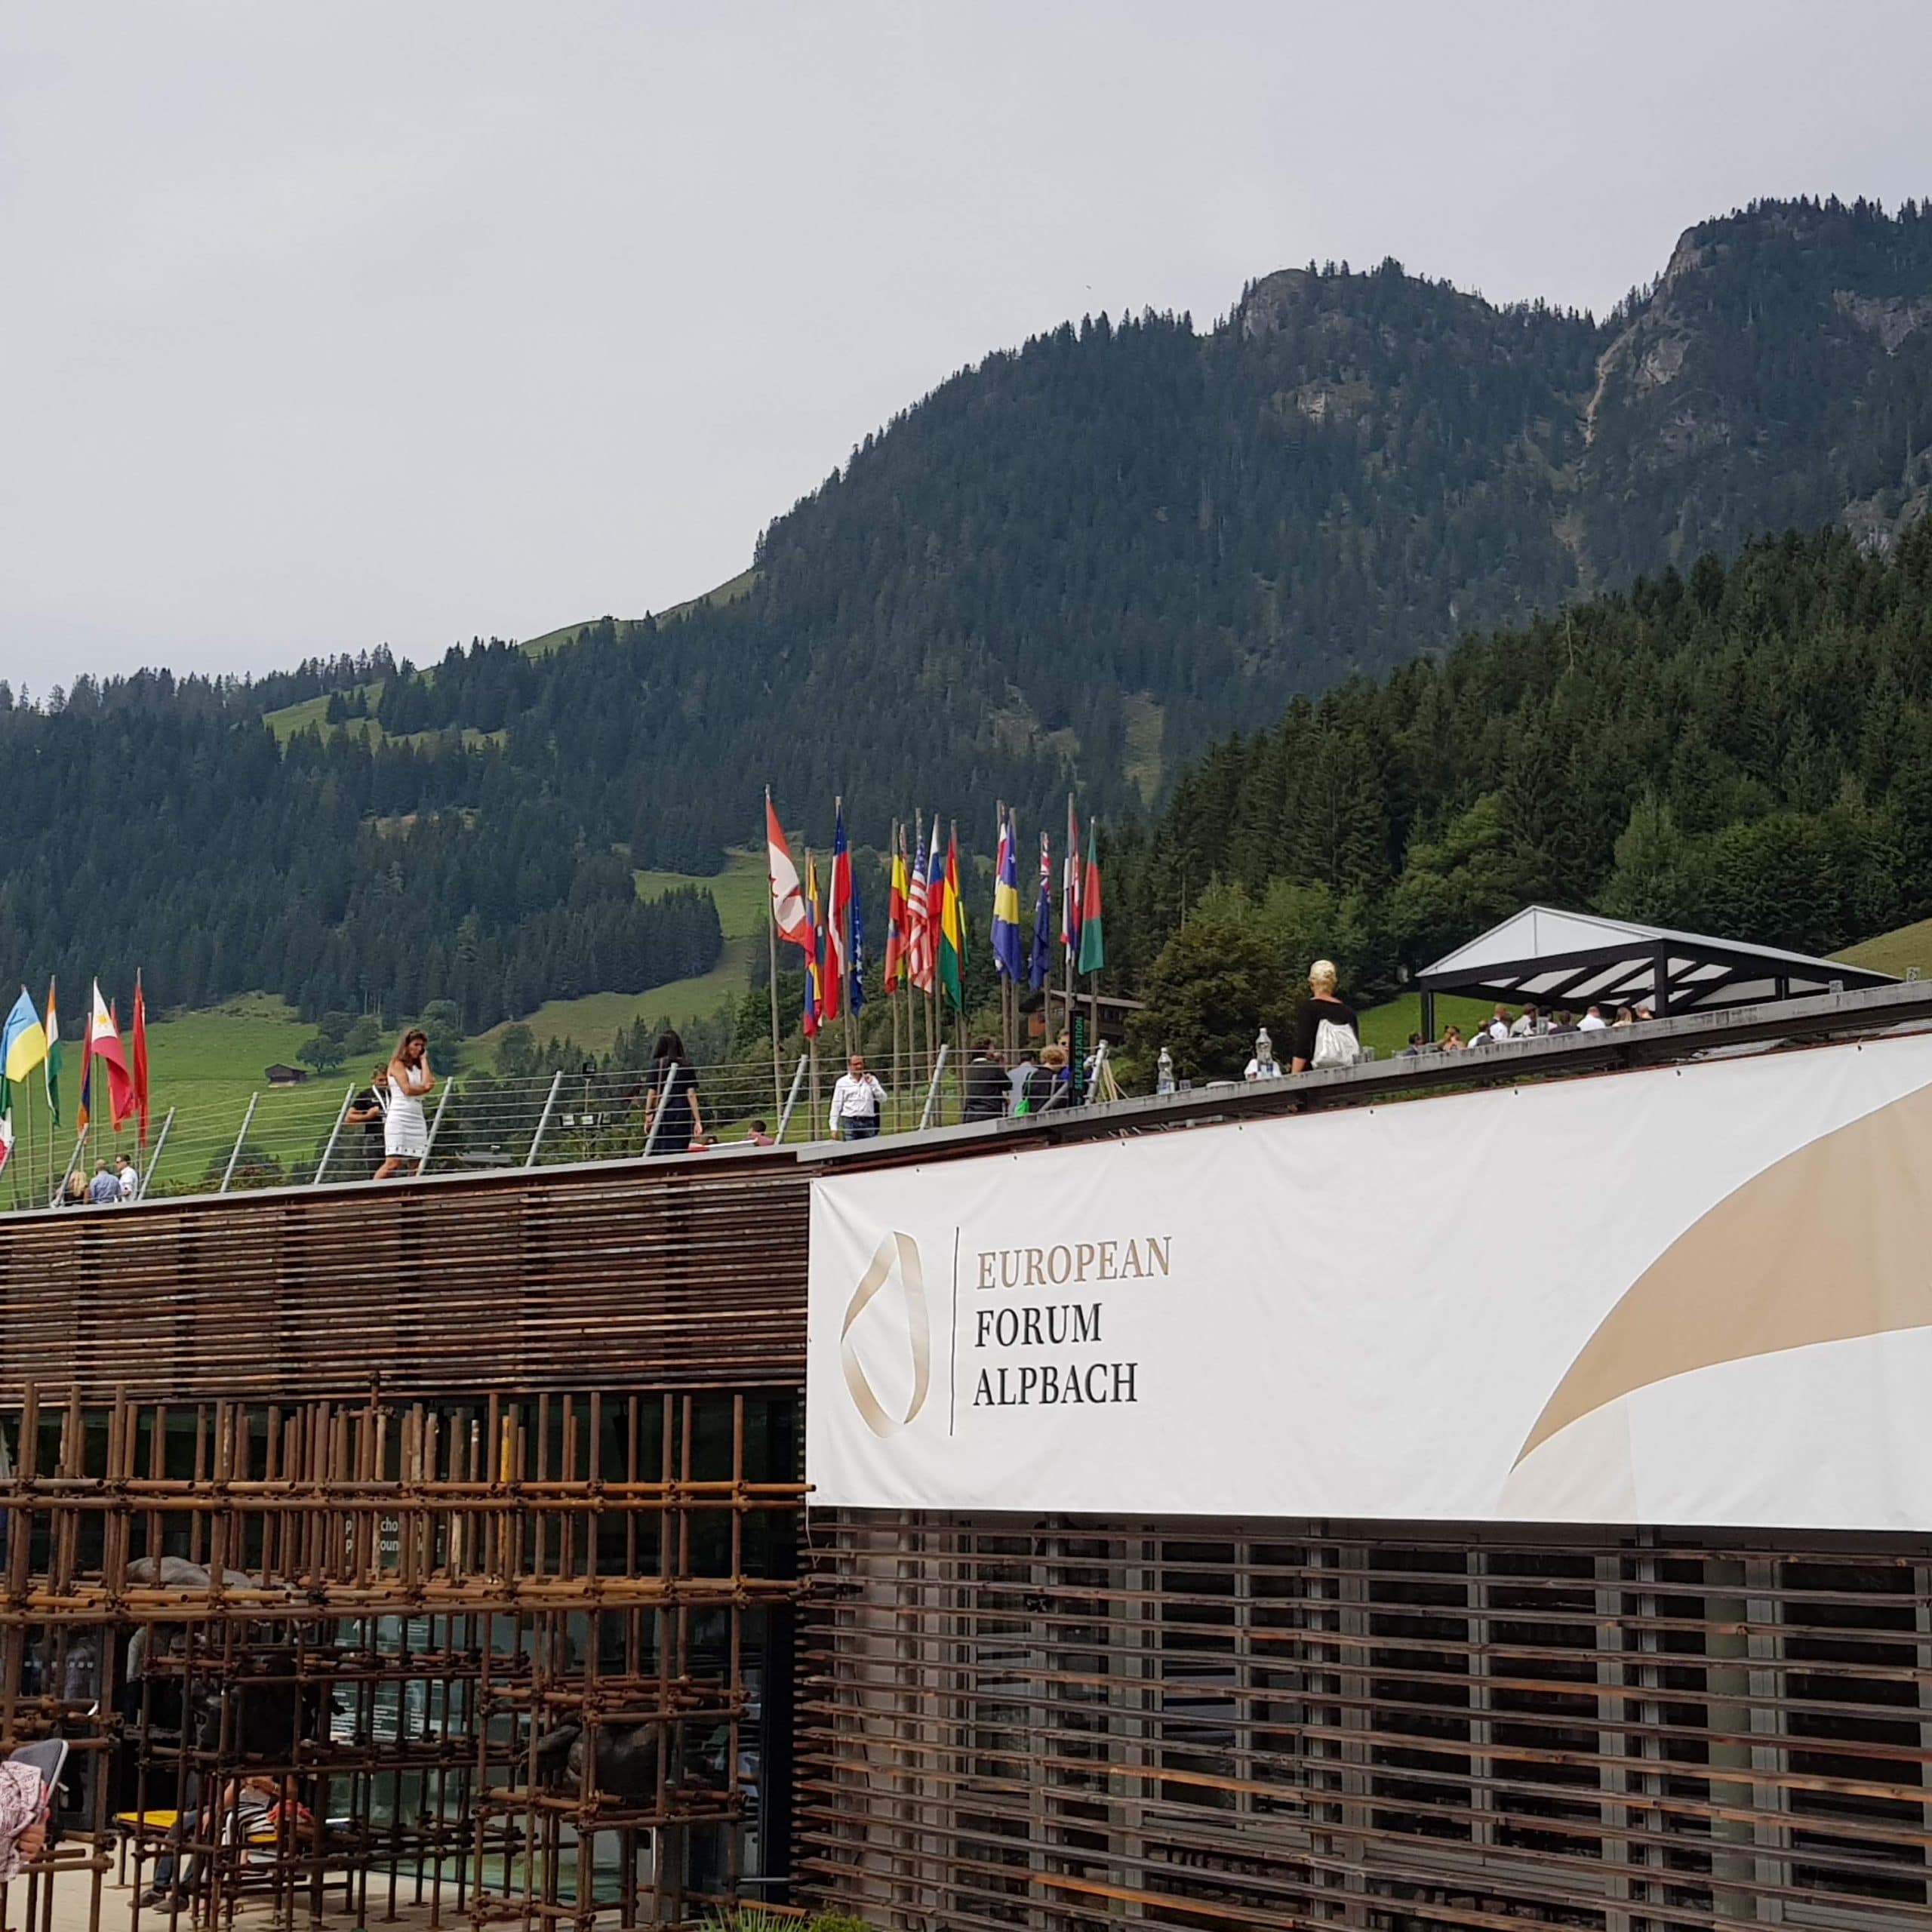 European Forum Alpbach